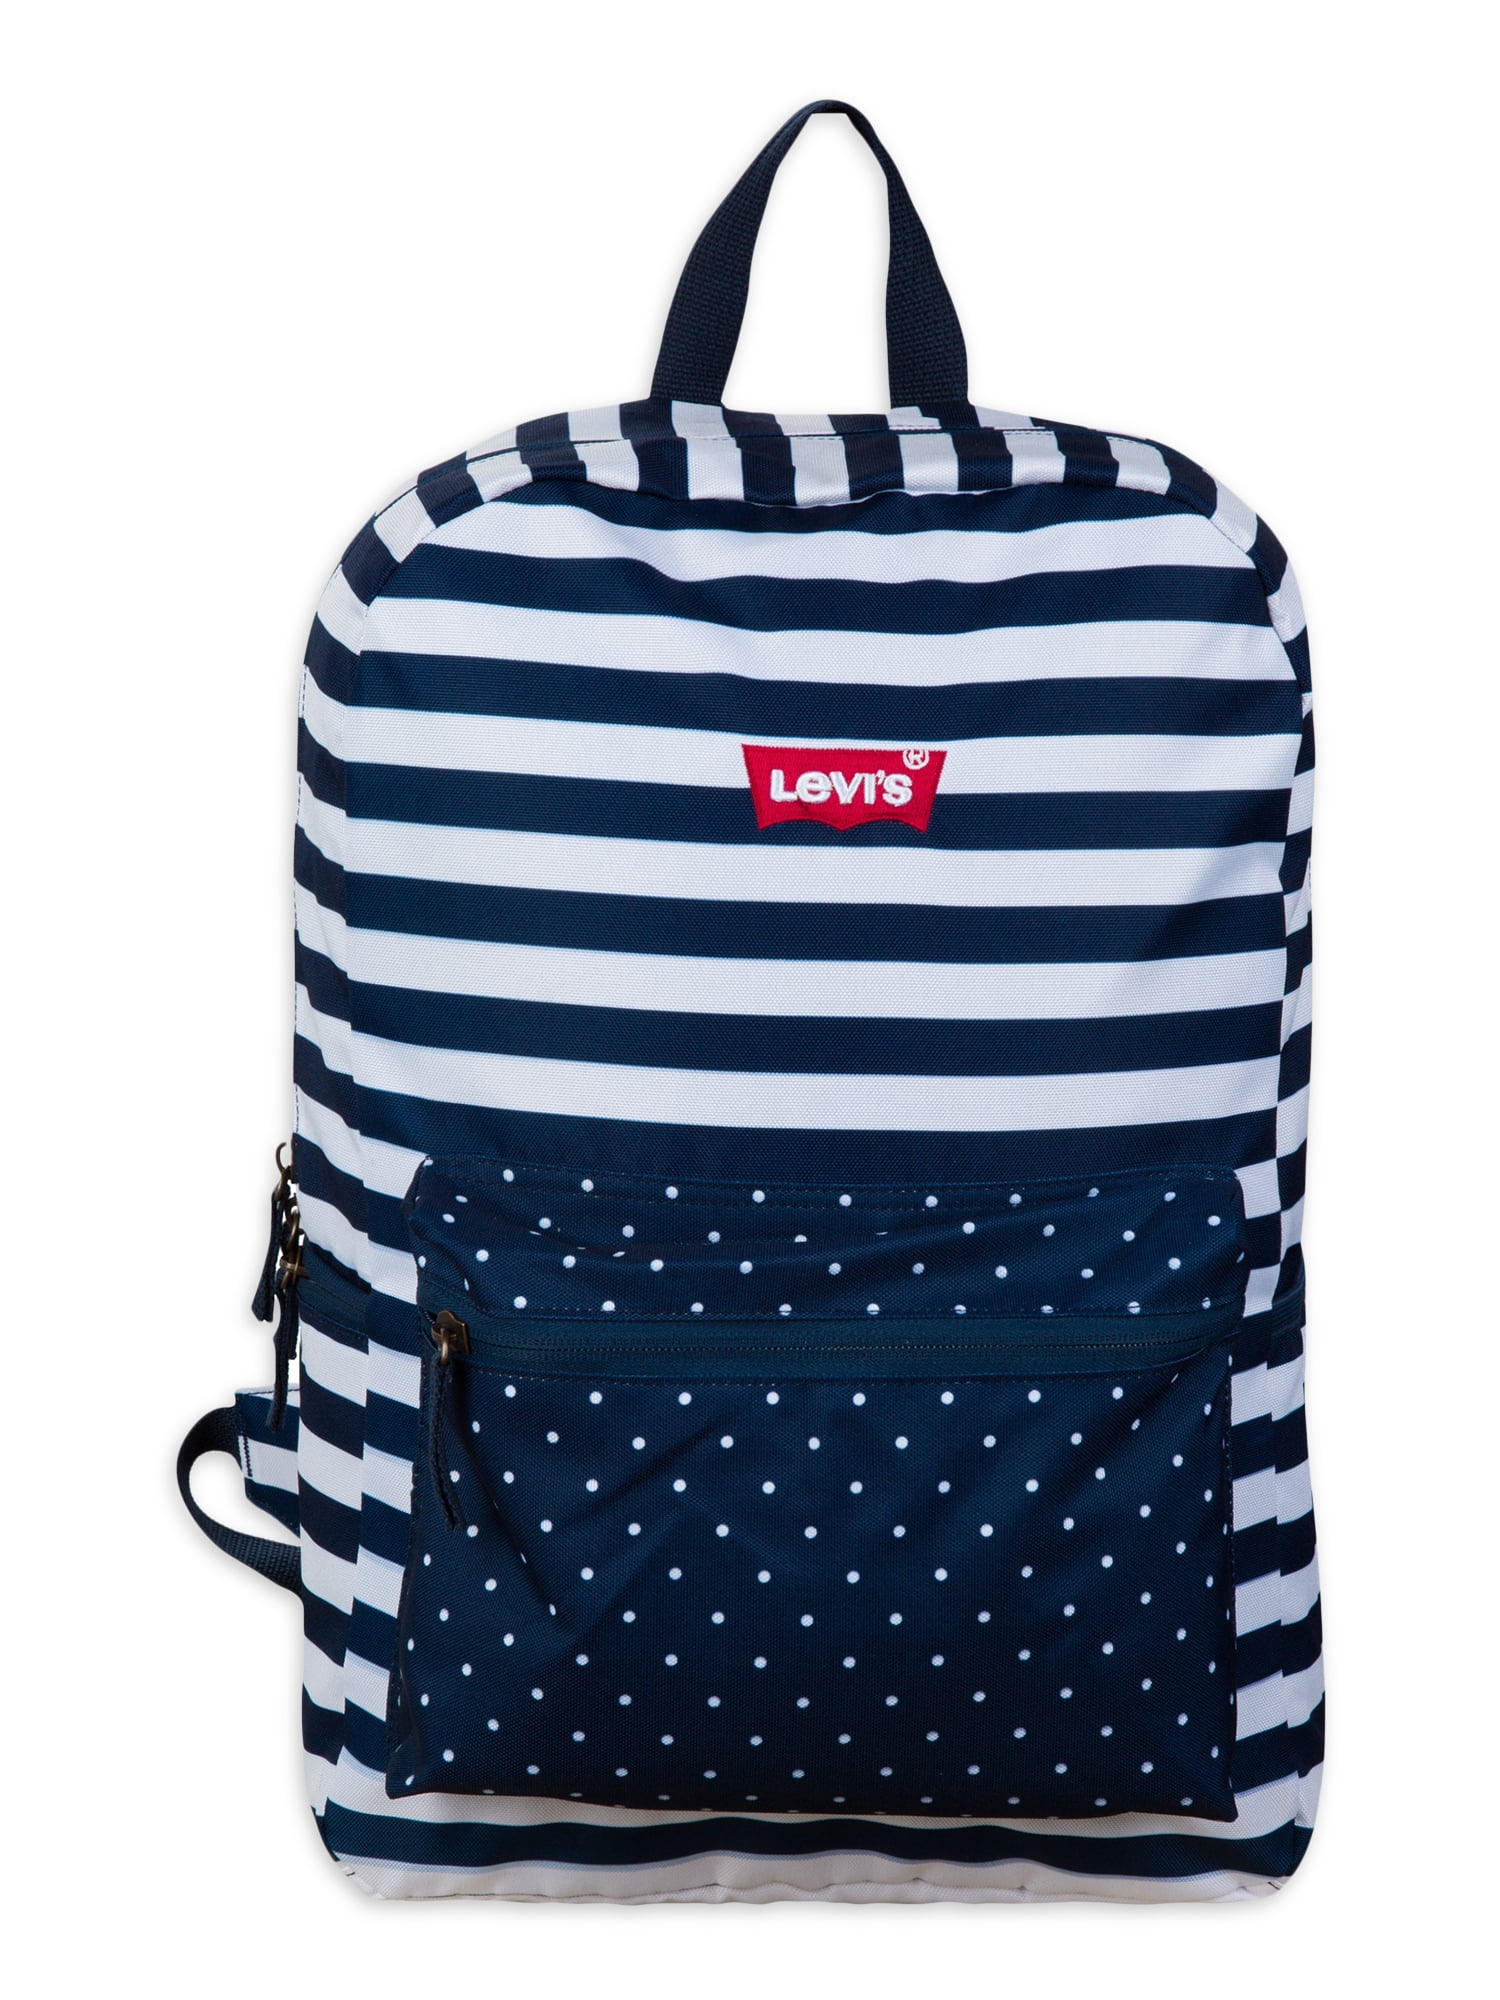 Levi's - Levi's Colorblock Backpack, Light Grey Heather - Walmart.com ...